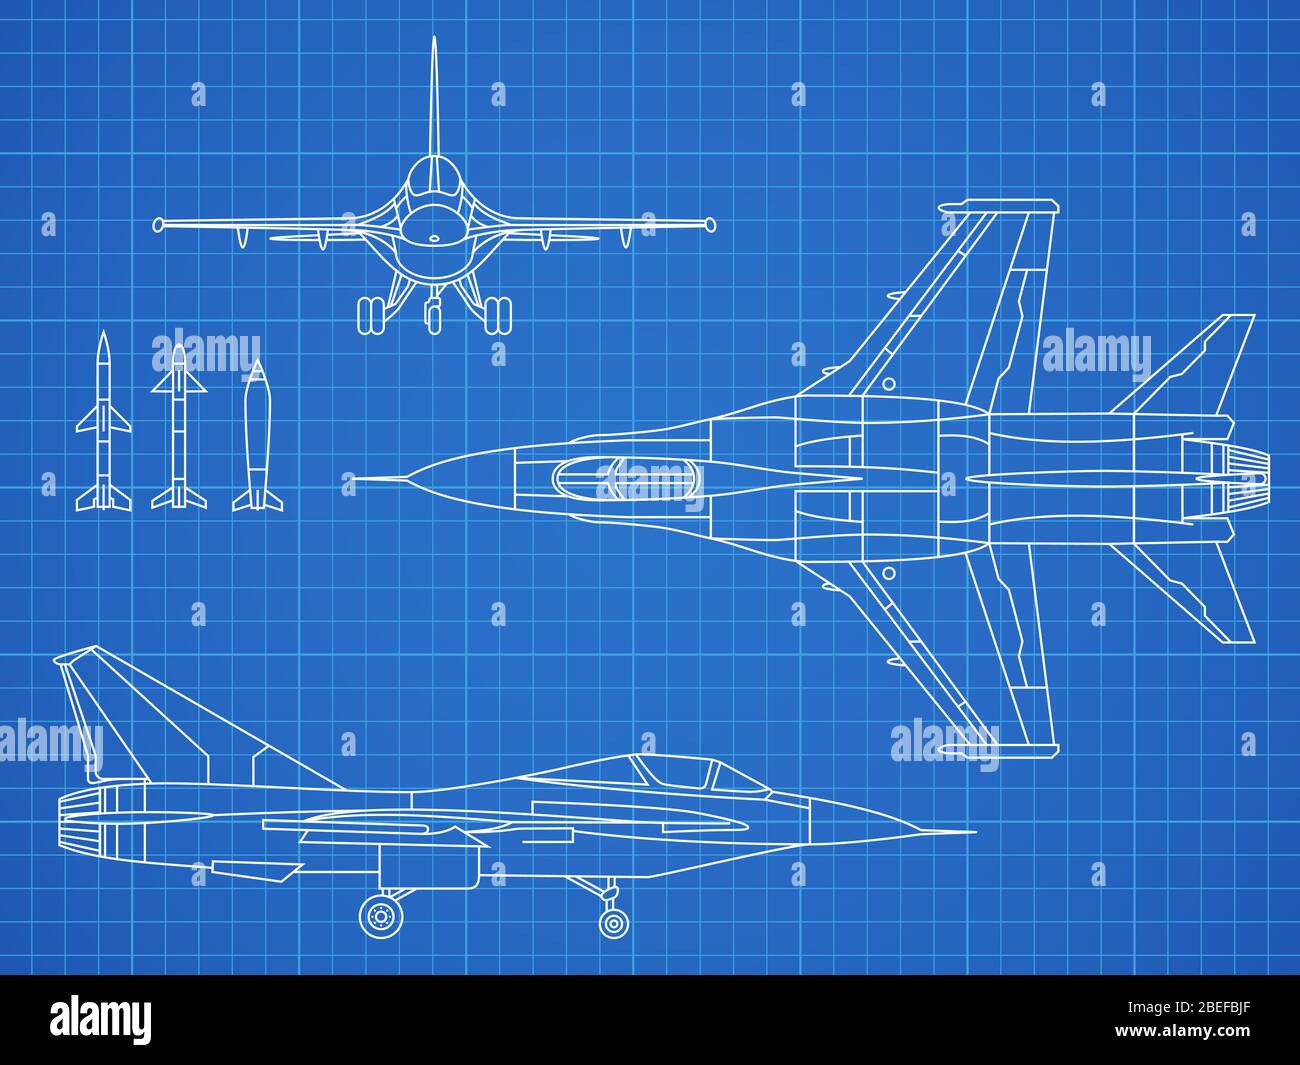 Military jet aircraft drawing vector blueprint design. Aircraft military plan blueprint illustration Stock Vector